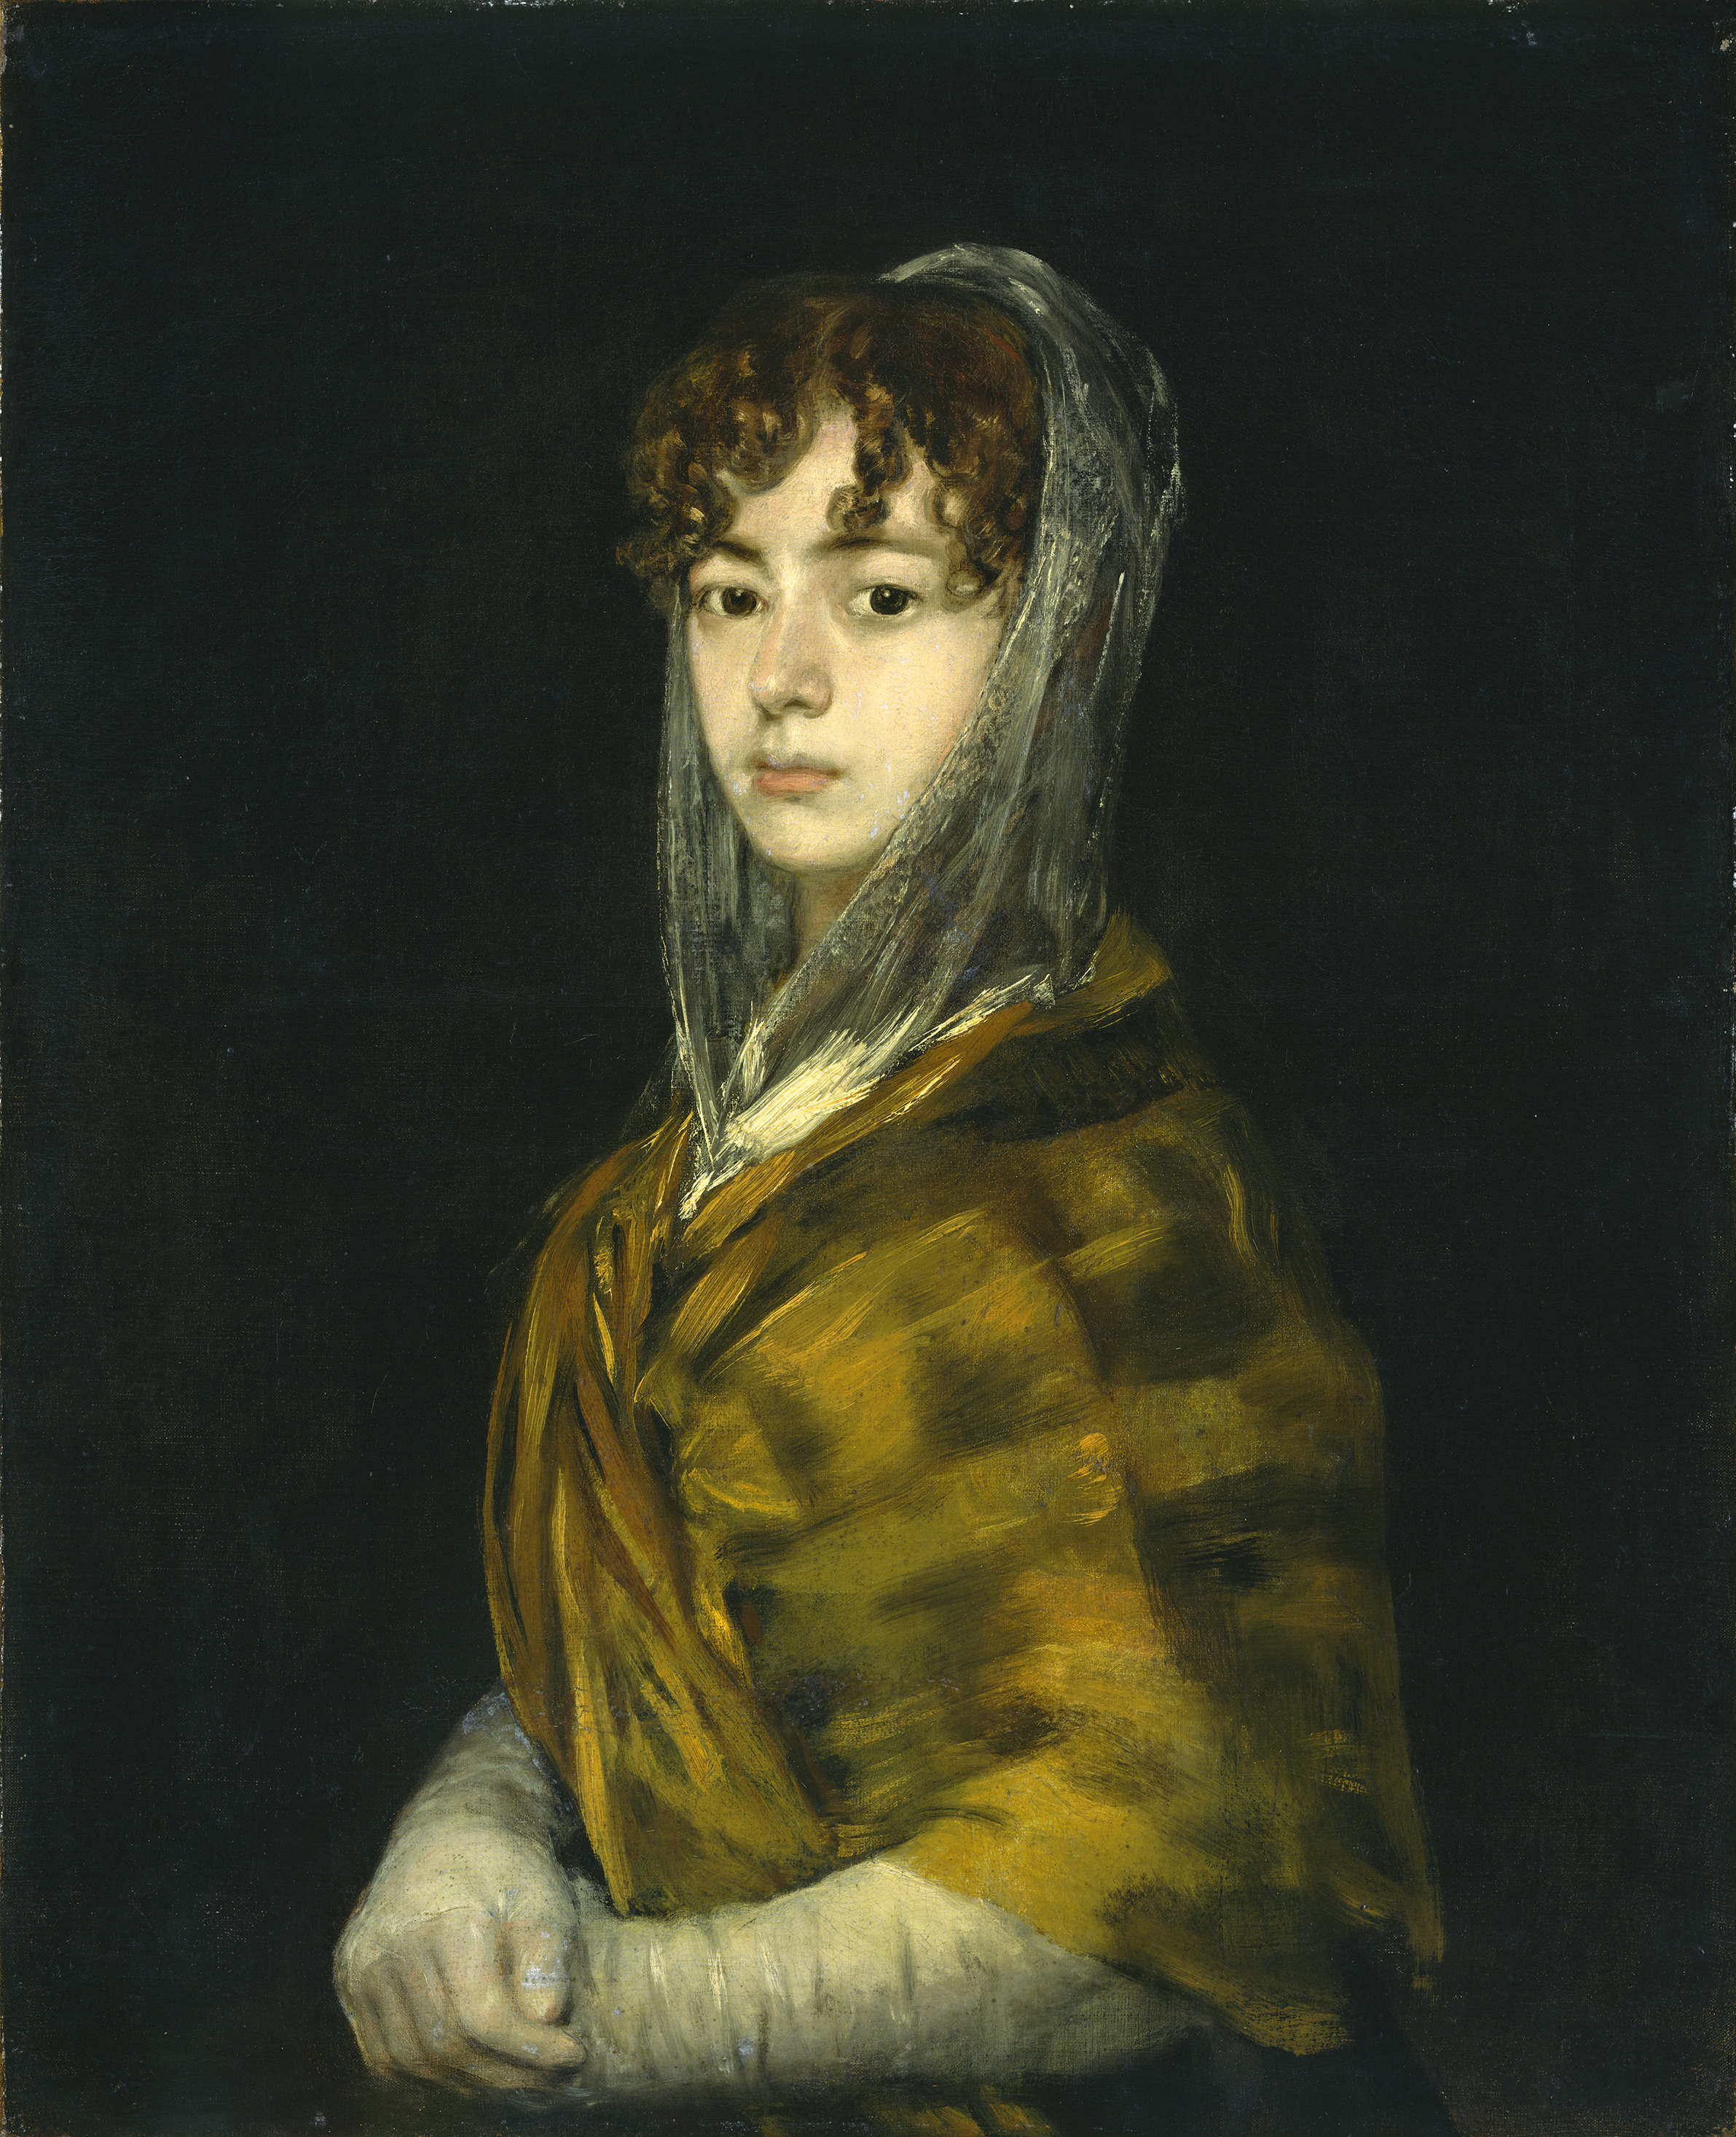 Señora Sabasa Garcia by Francisco Goya - circa 1806 /1811 - 71 x 58 cm National Gallery of Art